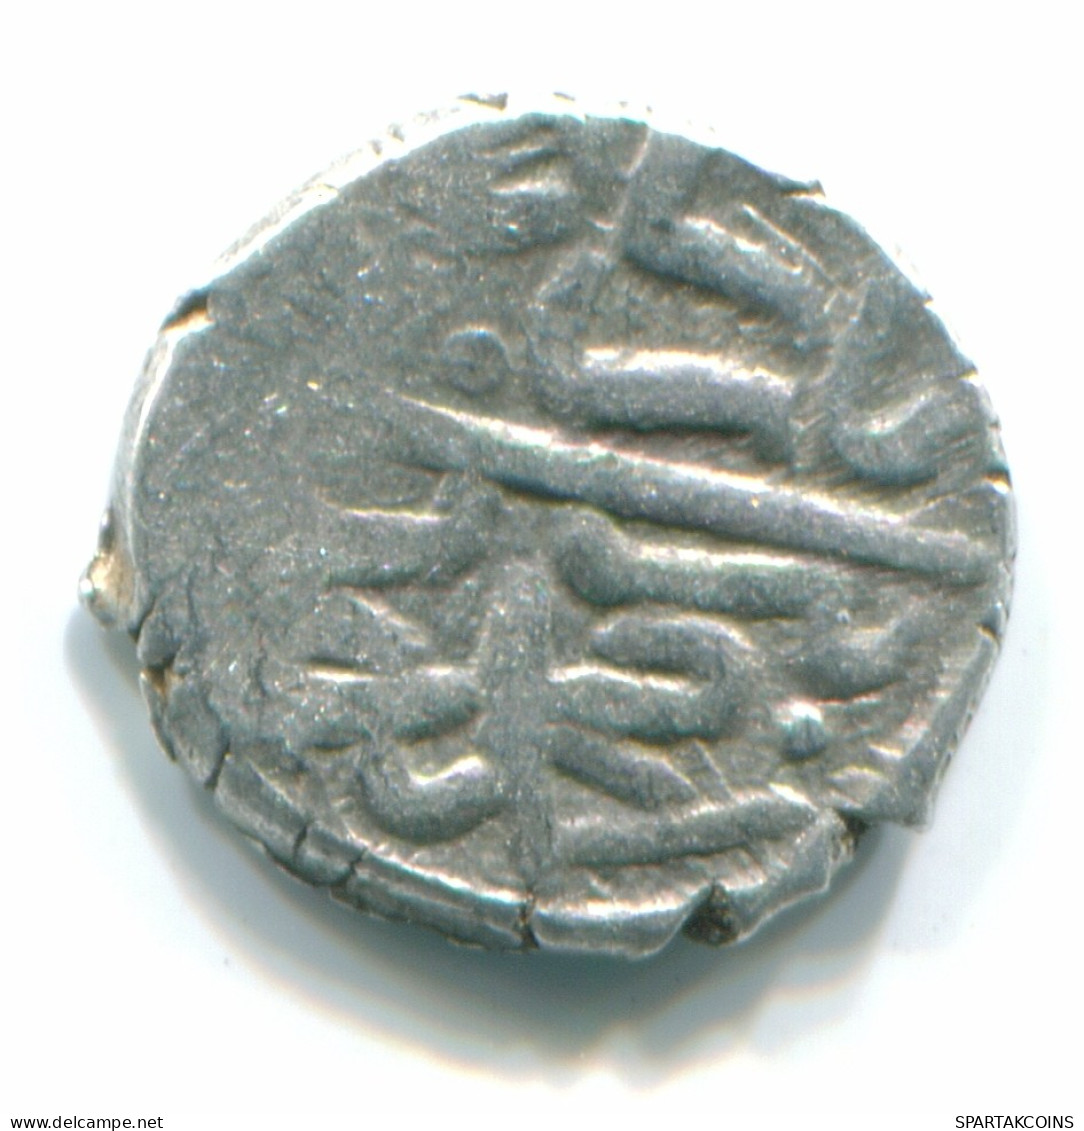 OTTOMAN EMPIRE BAYEZID II 1 Akce 1481-1512 AD Silver Islamic Coin #MED10070.7.F.A - Islamitisch